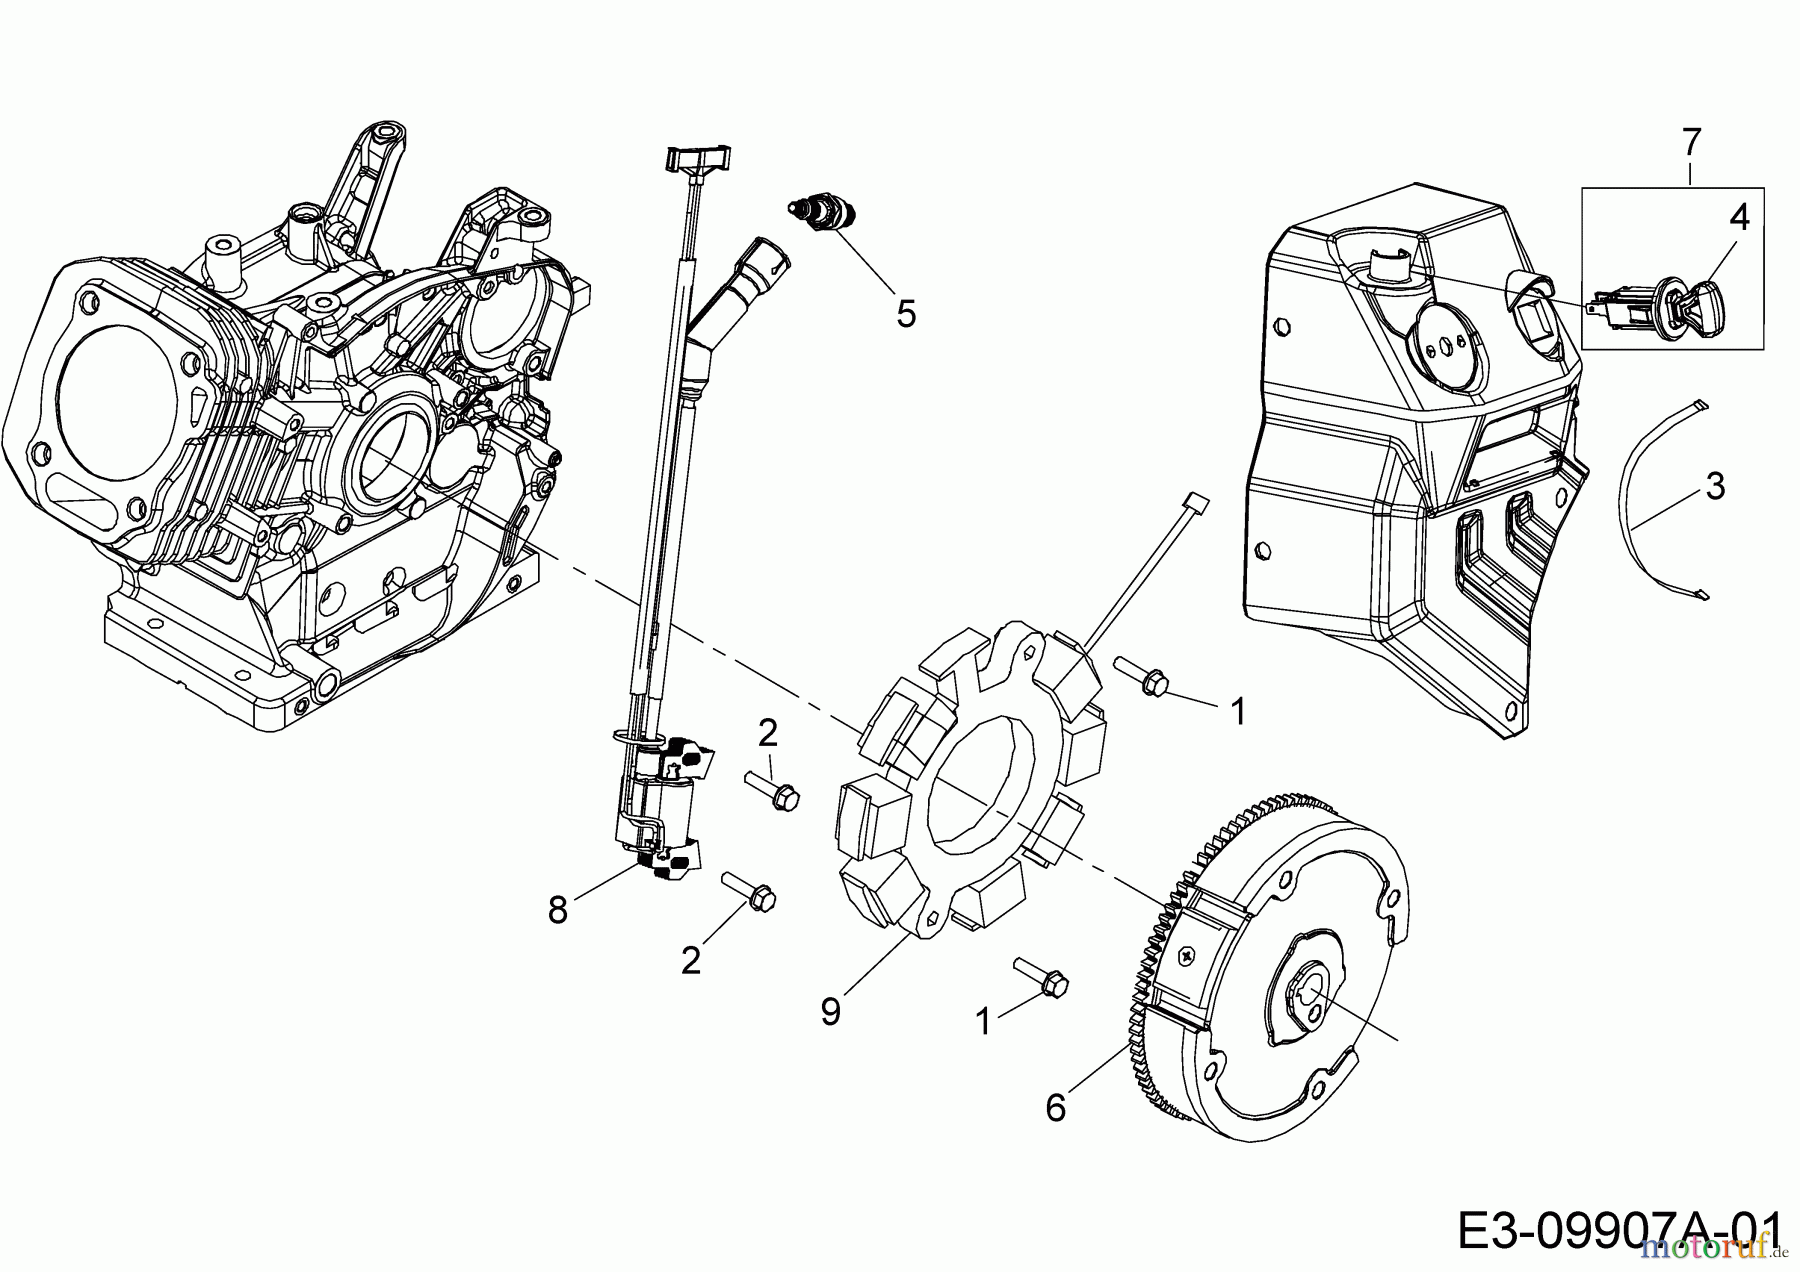  MTD-Engines Horizontal 683-WH 752Z683-WH  (2017) Flywheel, Ignition key, Ignition